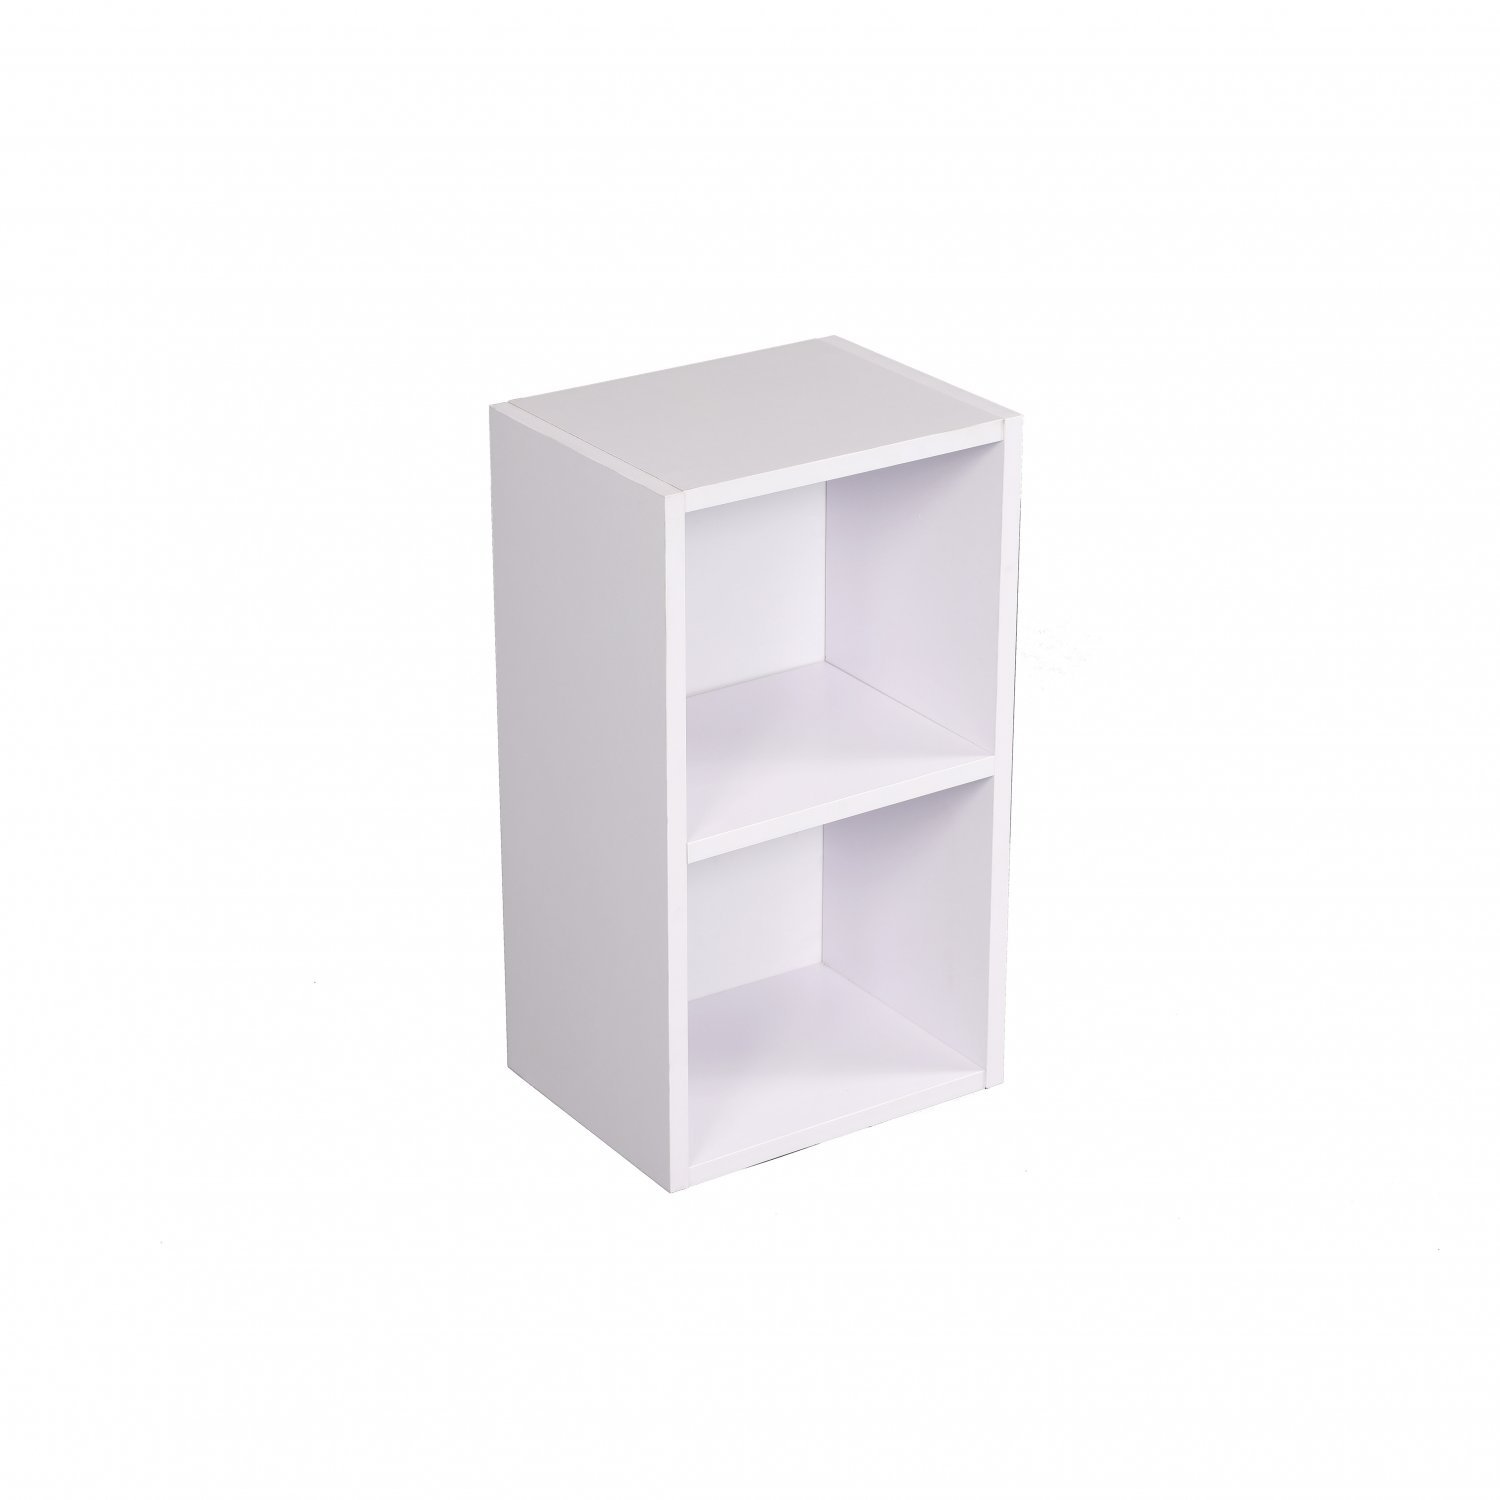 2 Tier Wooden Shelf White Bookcase, White Bookcase Shelf Unit